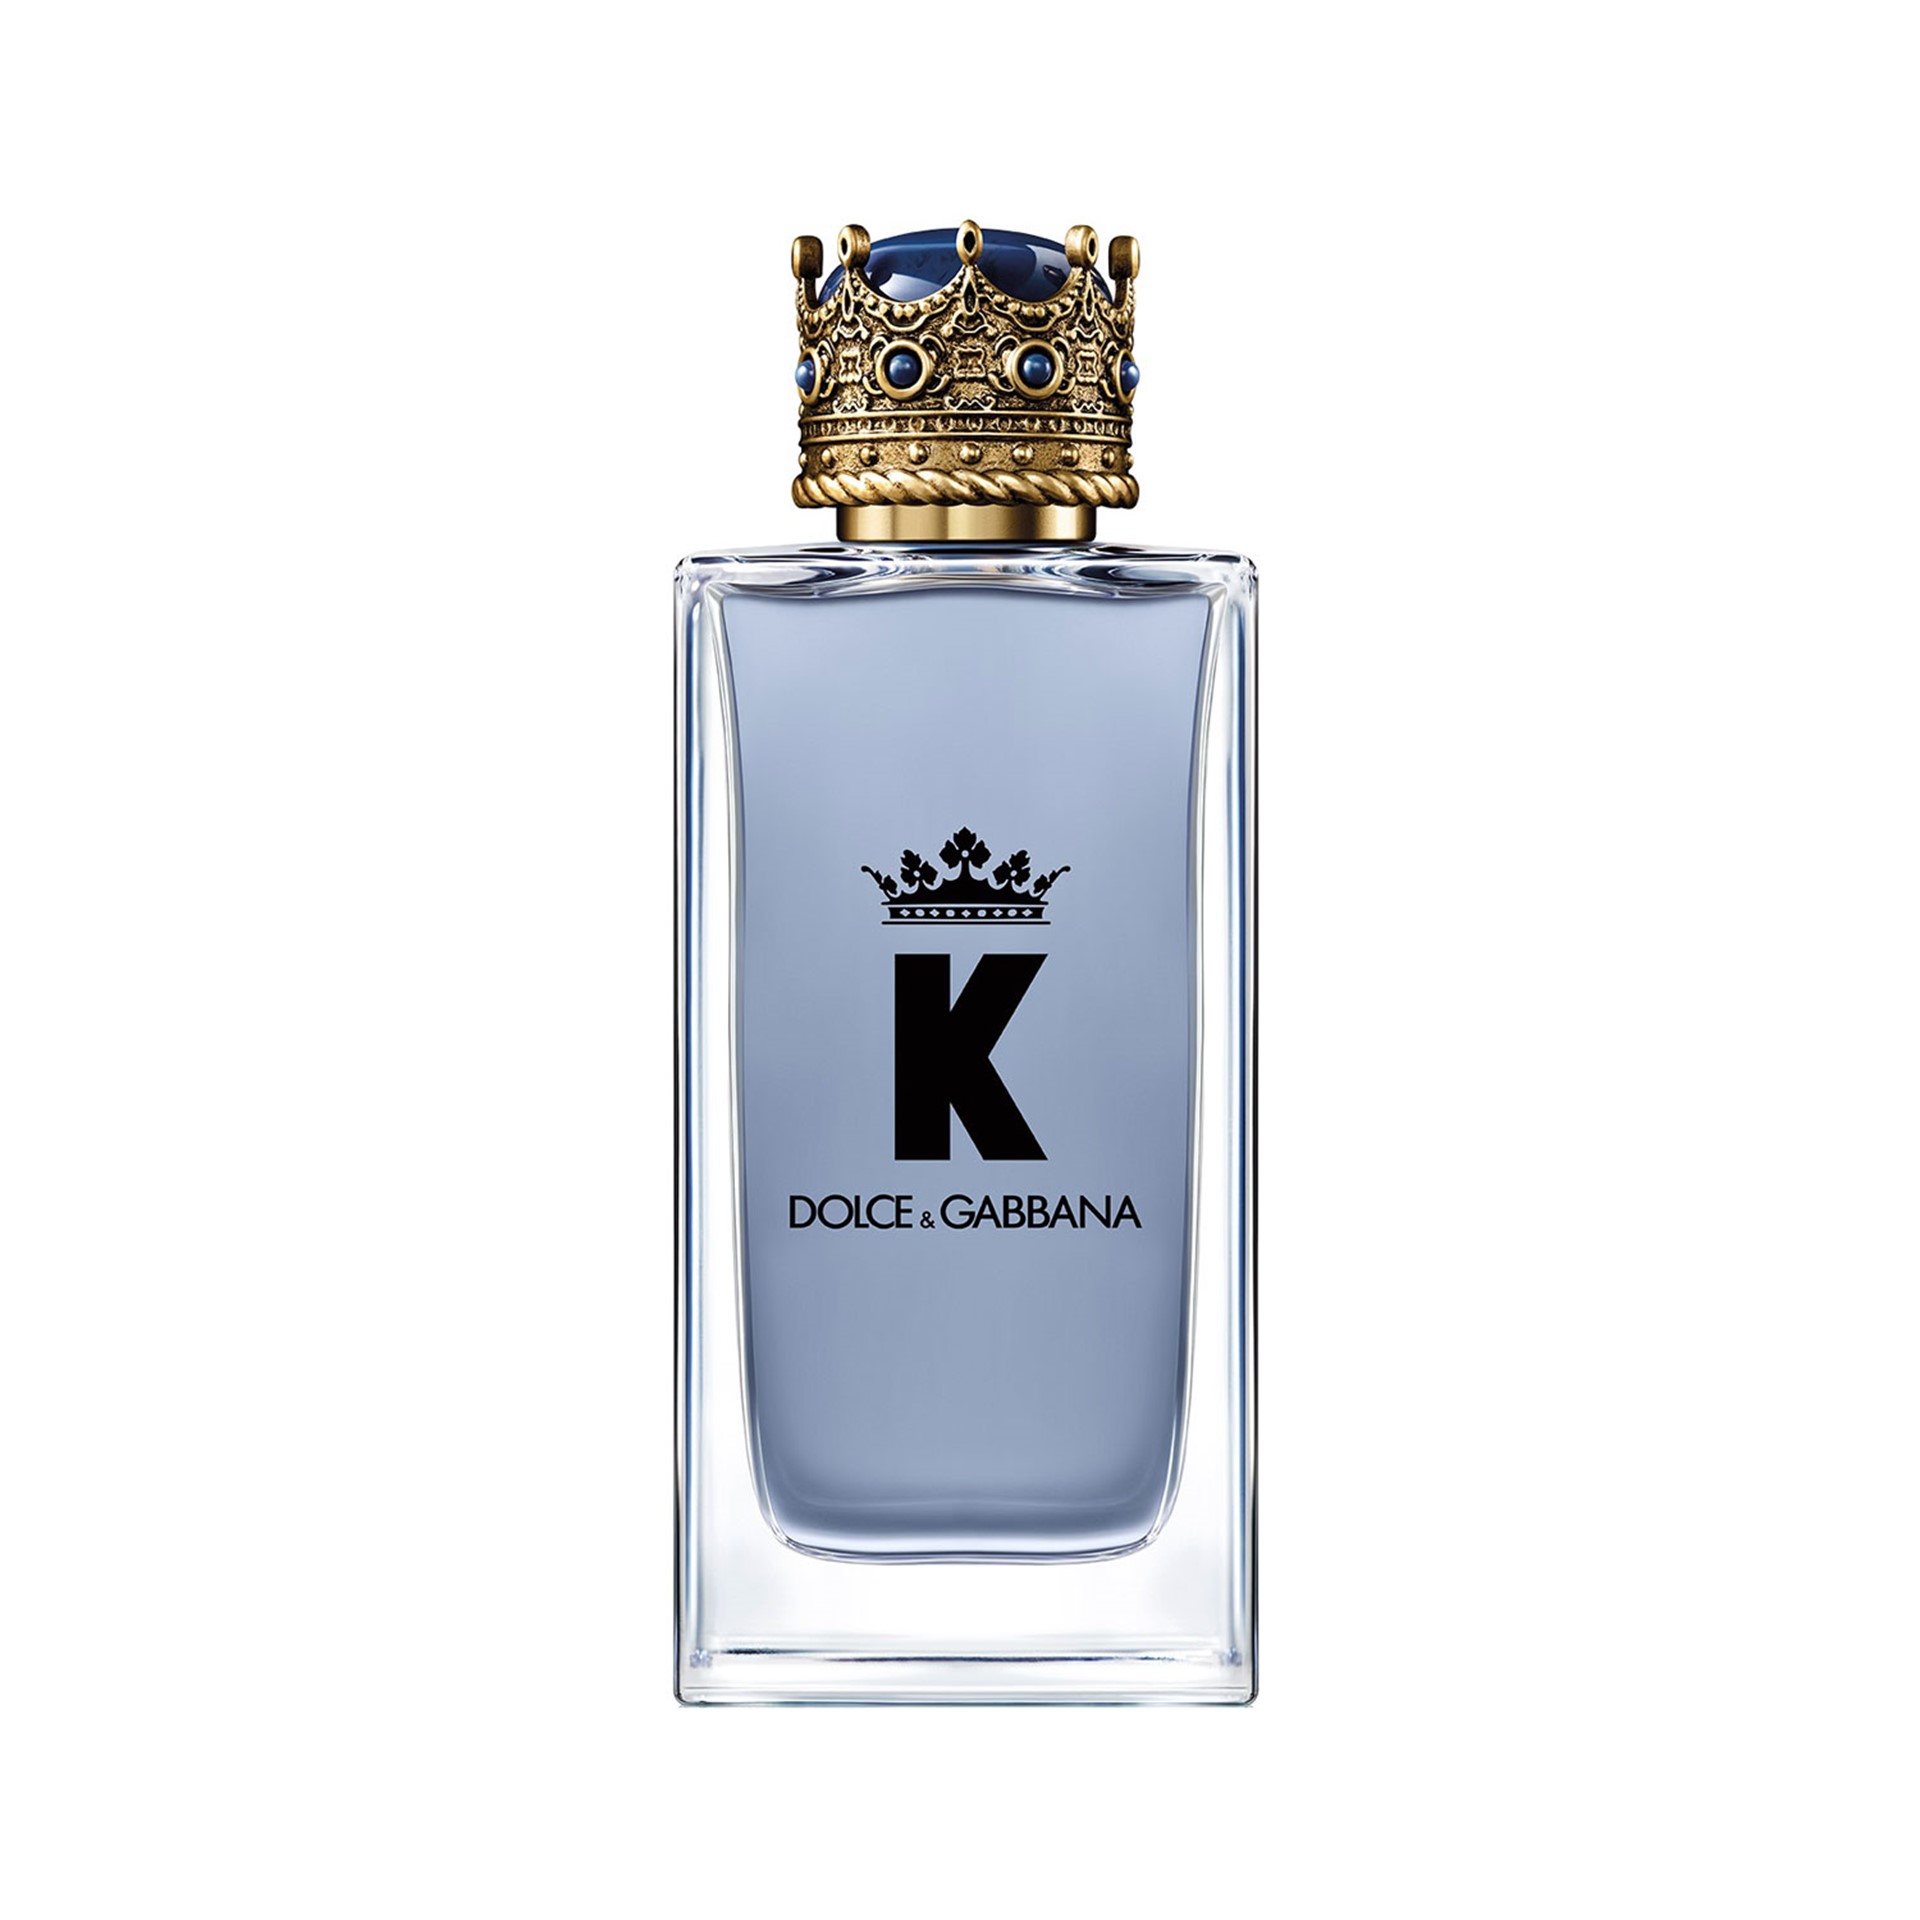 Дольче габбана мужские кинг. •Dolce&Gabbana k EDT 100ml. Dolce and Gabbana King 50 ml. Dolce&Gabbana k (m) 100ml EDT. Dolce Gabbana King 100ml.